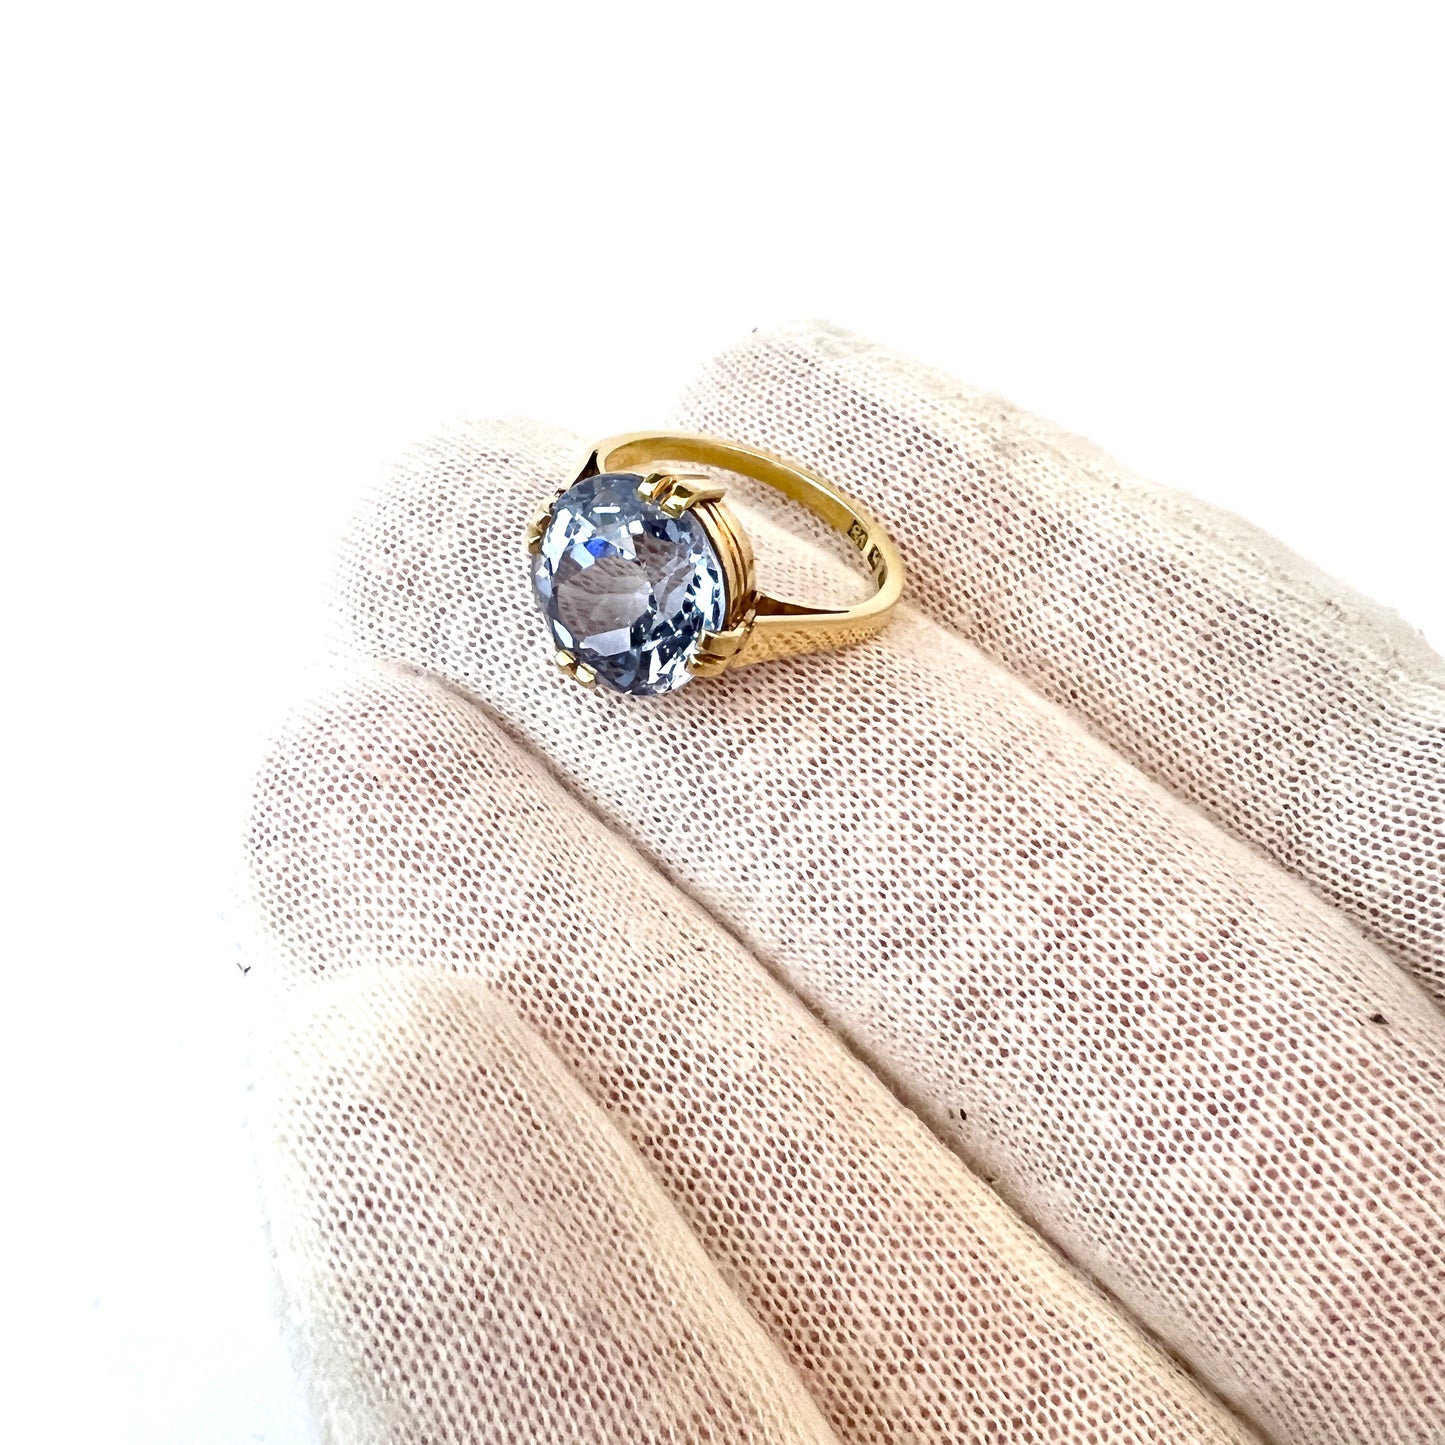 K Anderson, Sweden 1947. Vintage 14k Gold Ice Blue Synthetic Spinel Ring.